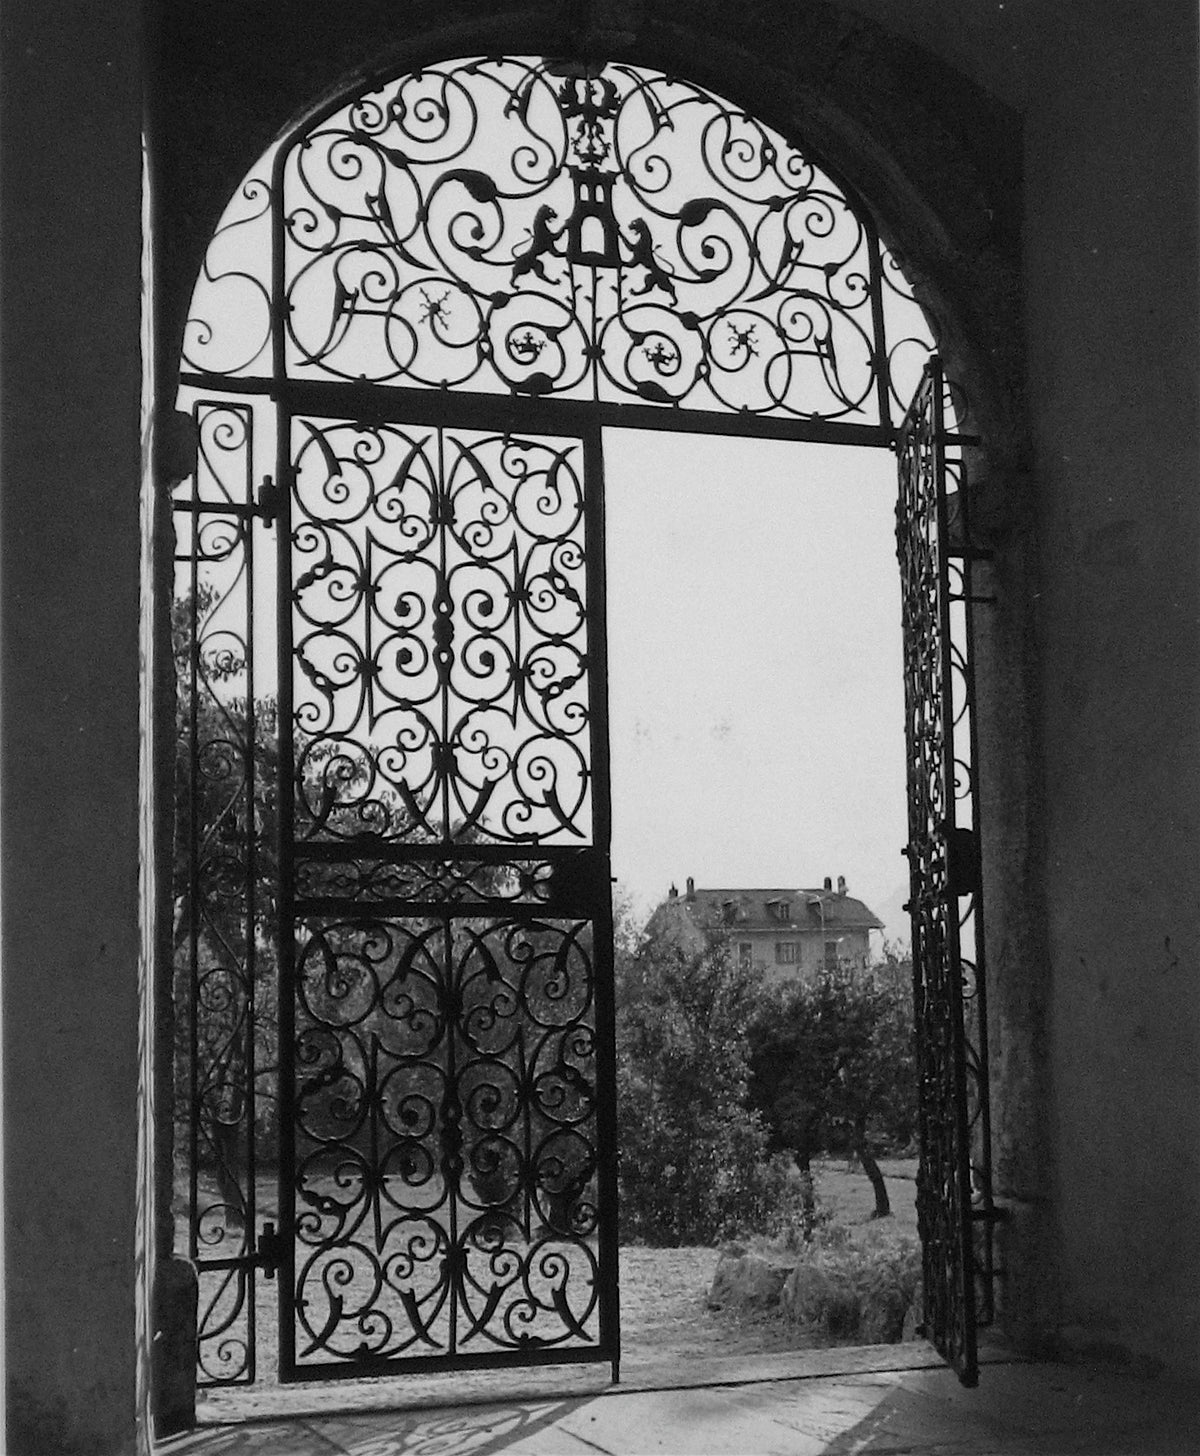 Paisley Door Archway &lt;br&gt;1960s Photograph&lt;br&gt;&lt;br&gt;#12145